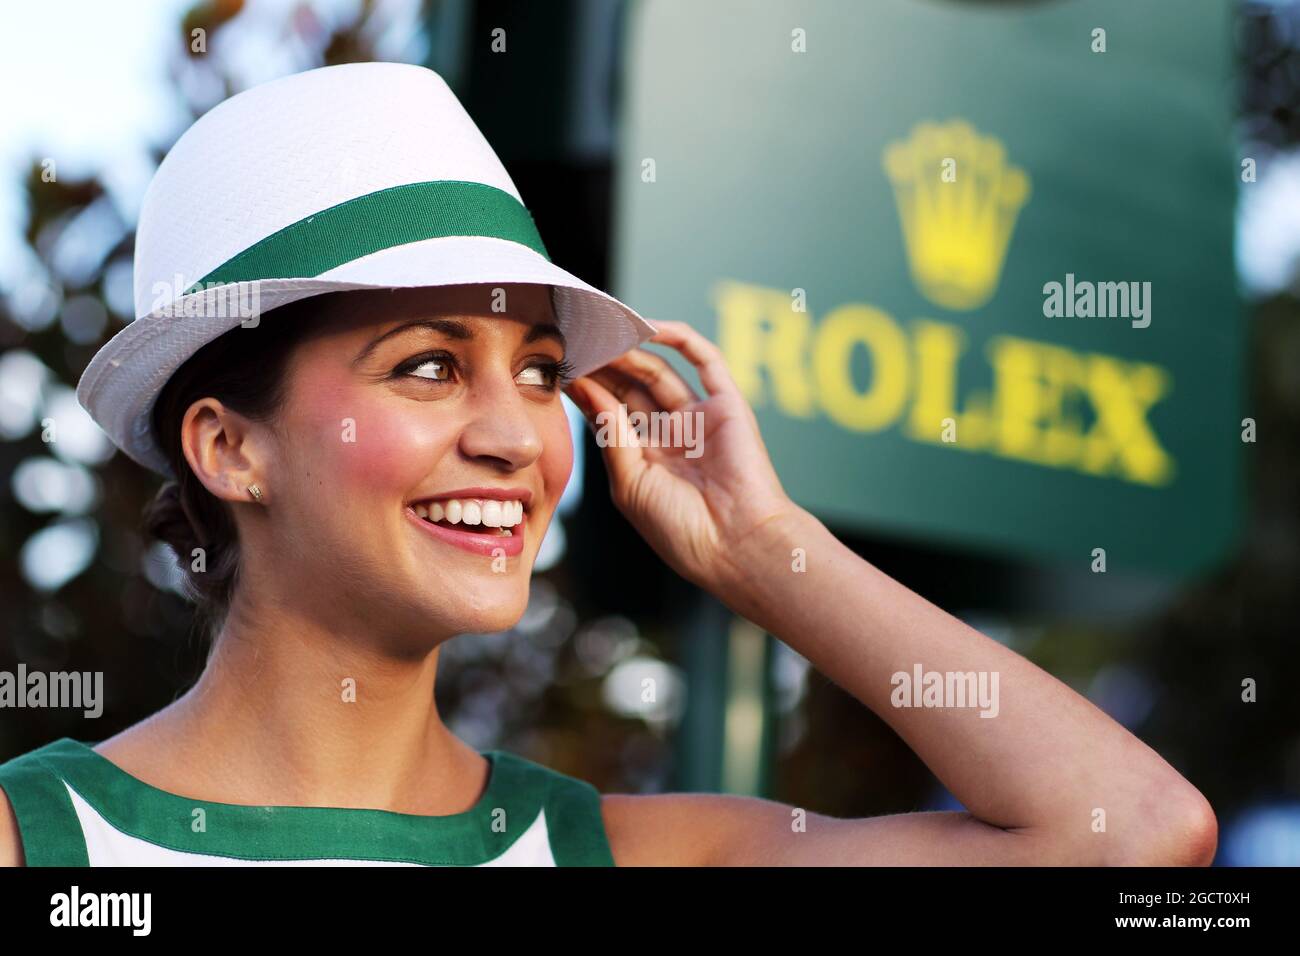 Rolex niña. Gran Premio de Australia, viernes 15th de marzo de 2013. Albert Park, Melbourne, Australia. Foto de stock